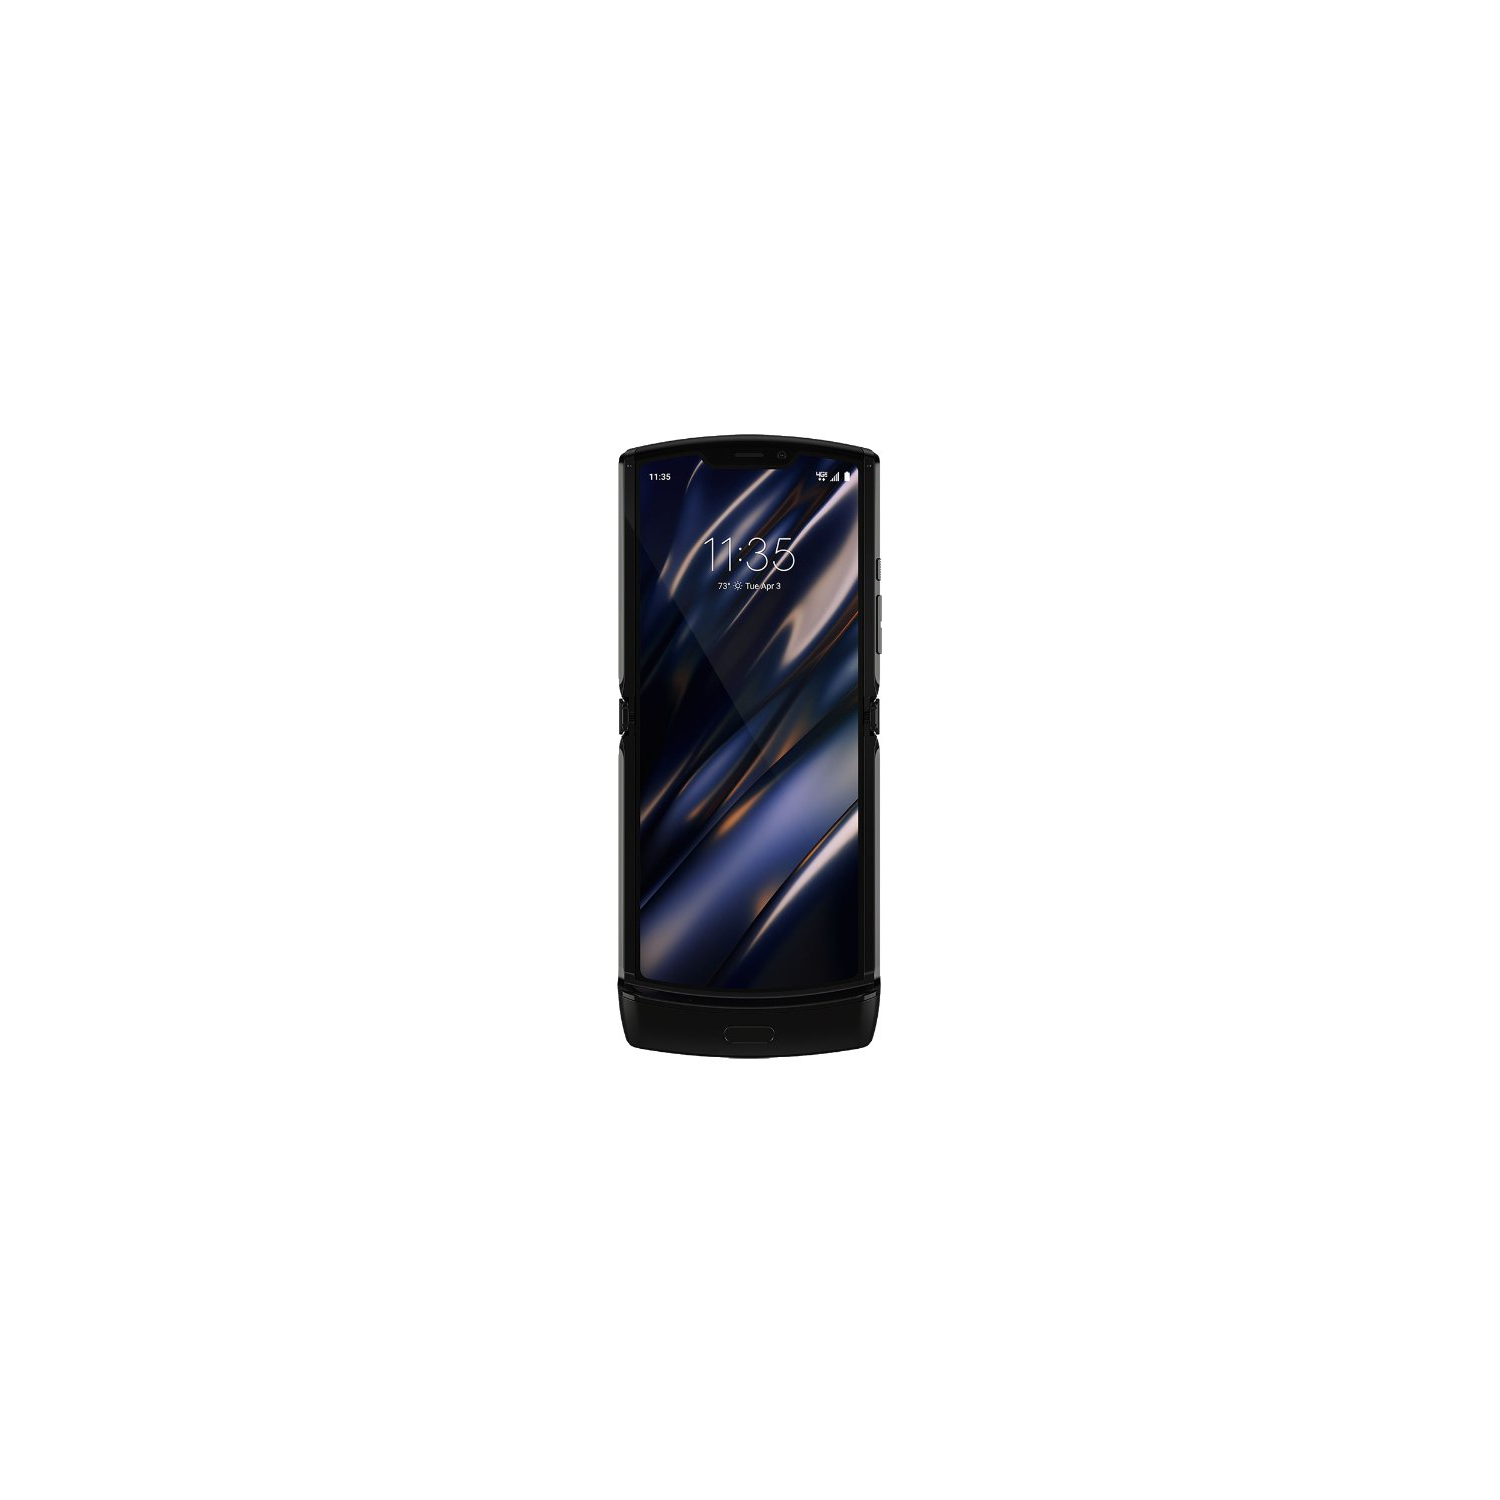 Motorola Razr (2019) 128GB Smartphone - Black - Unlocked - Open Box